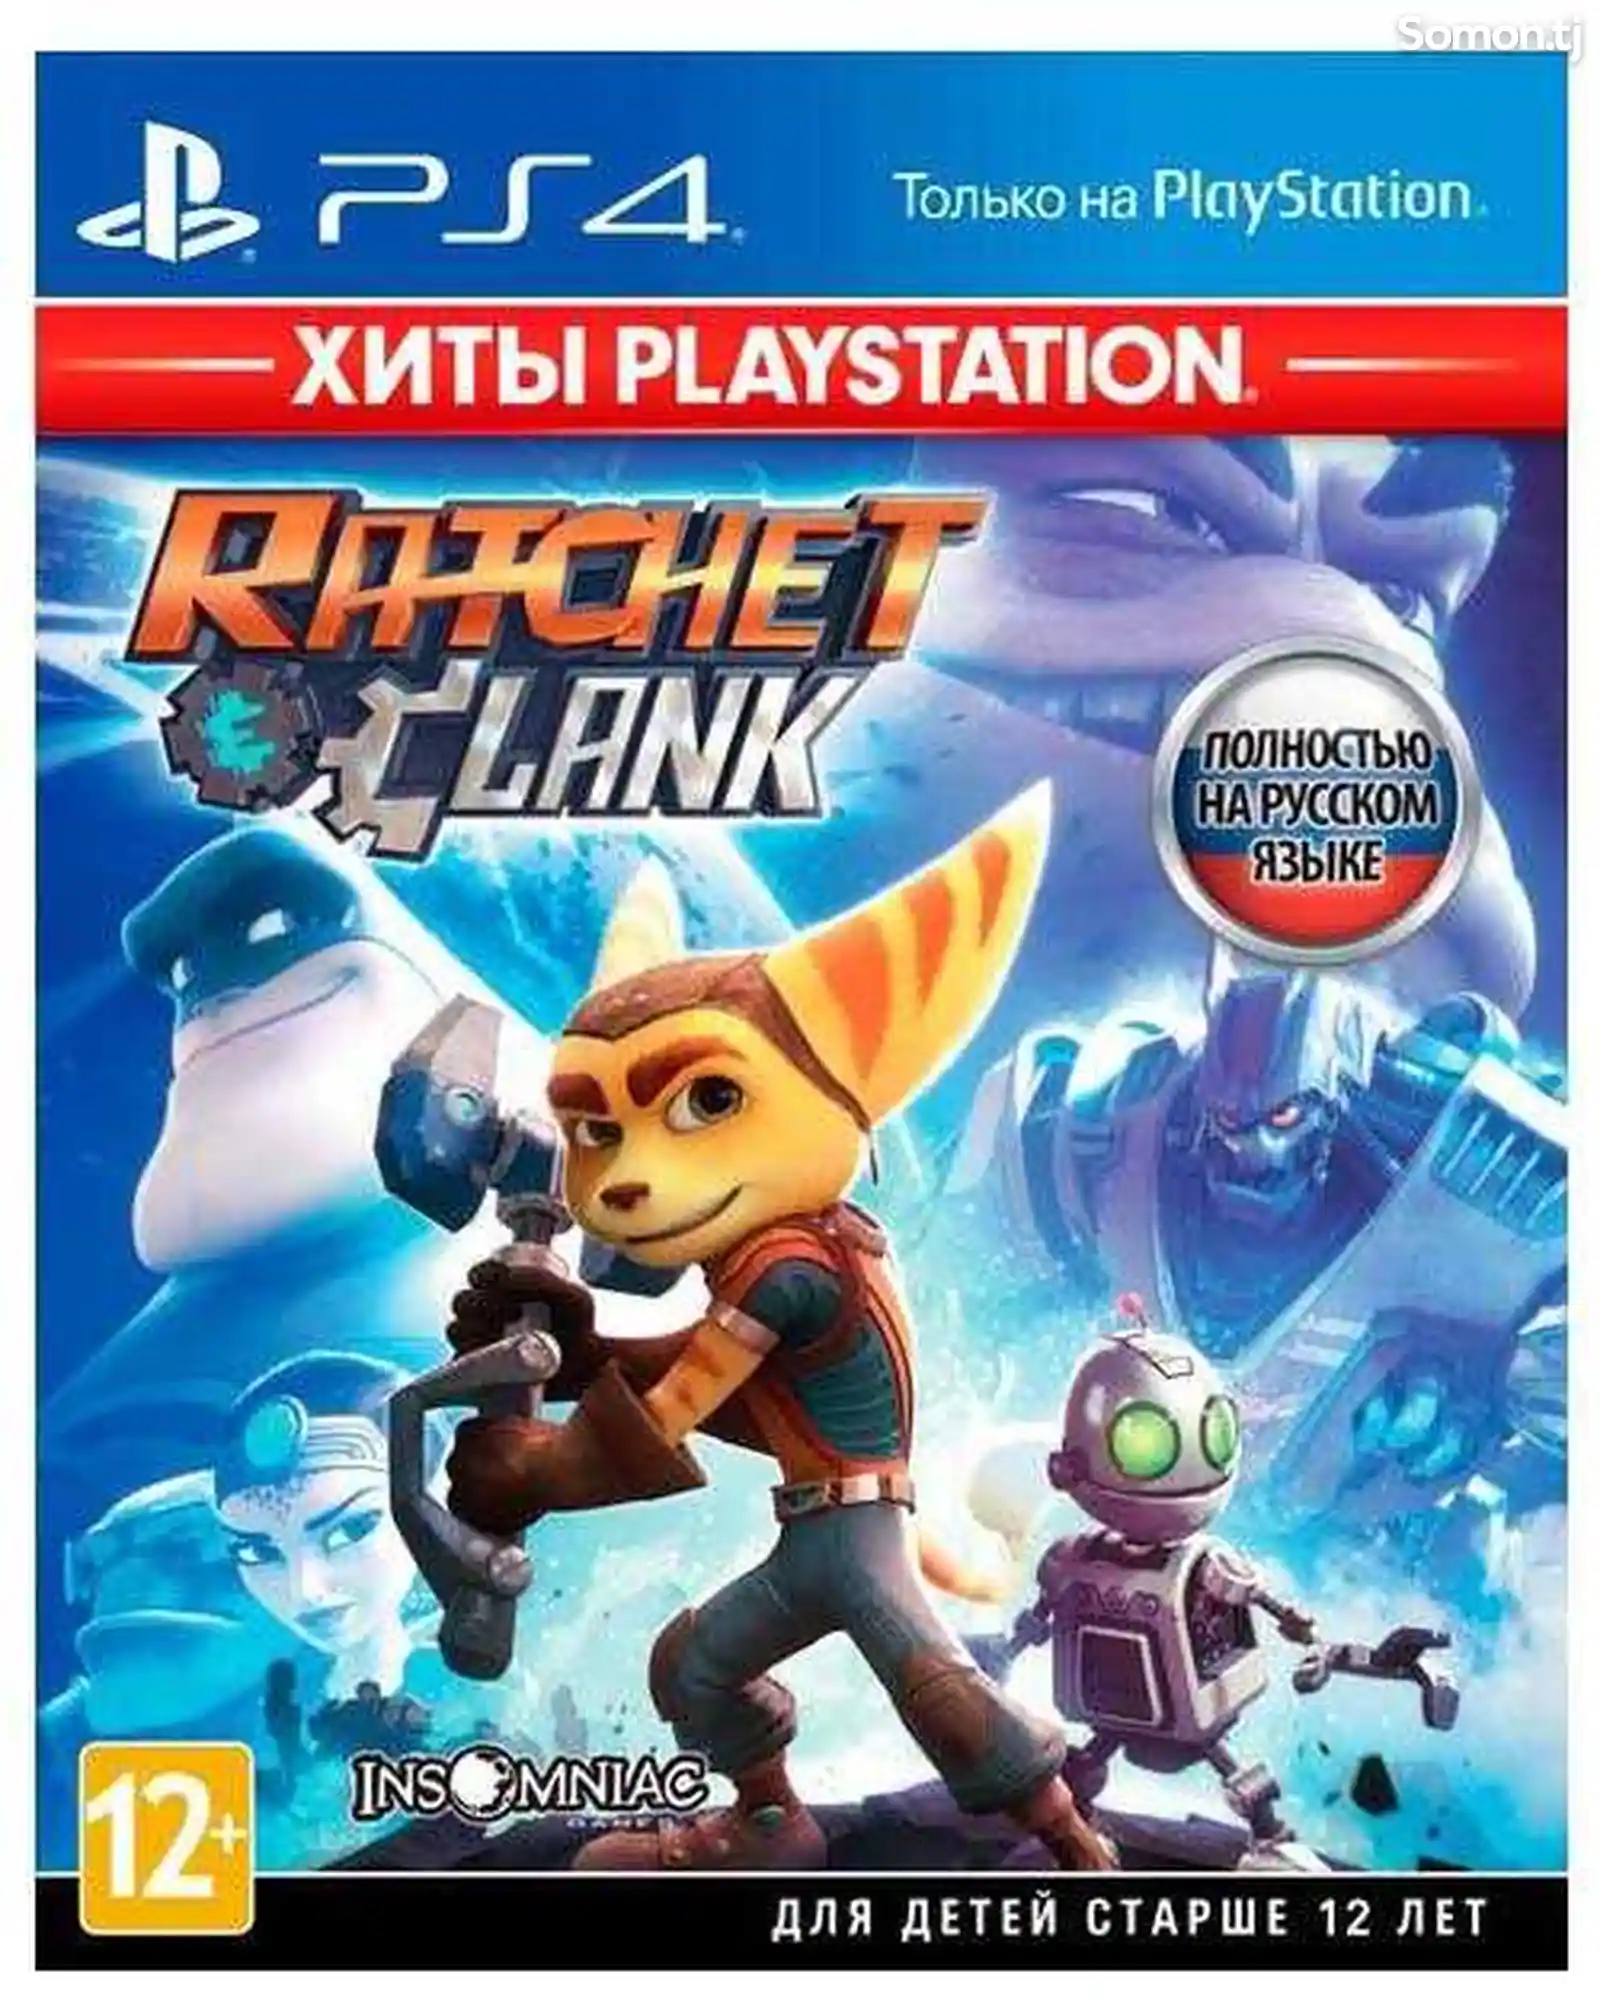 Игра Ratchet Clank для PS4-1